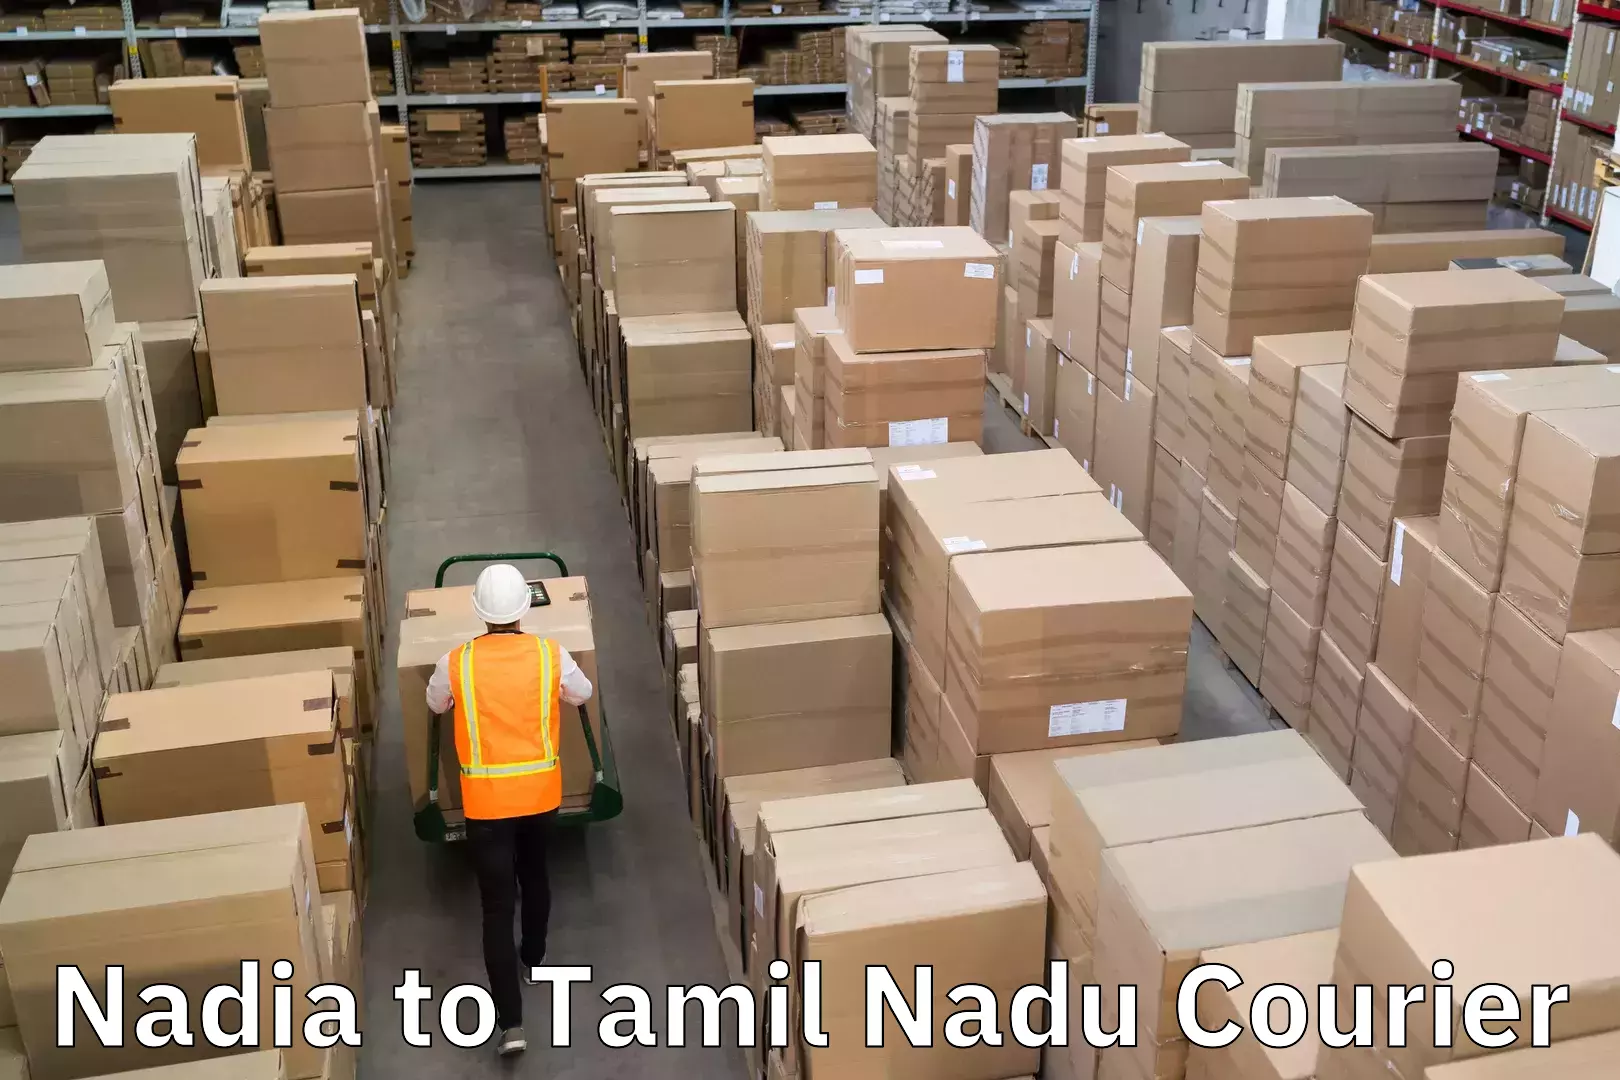 International courier networks Nadia to Chennai Port